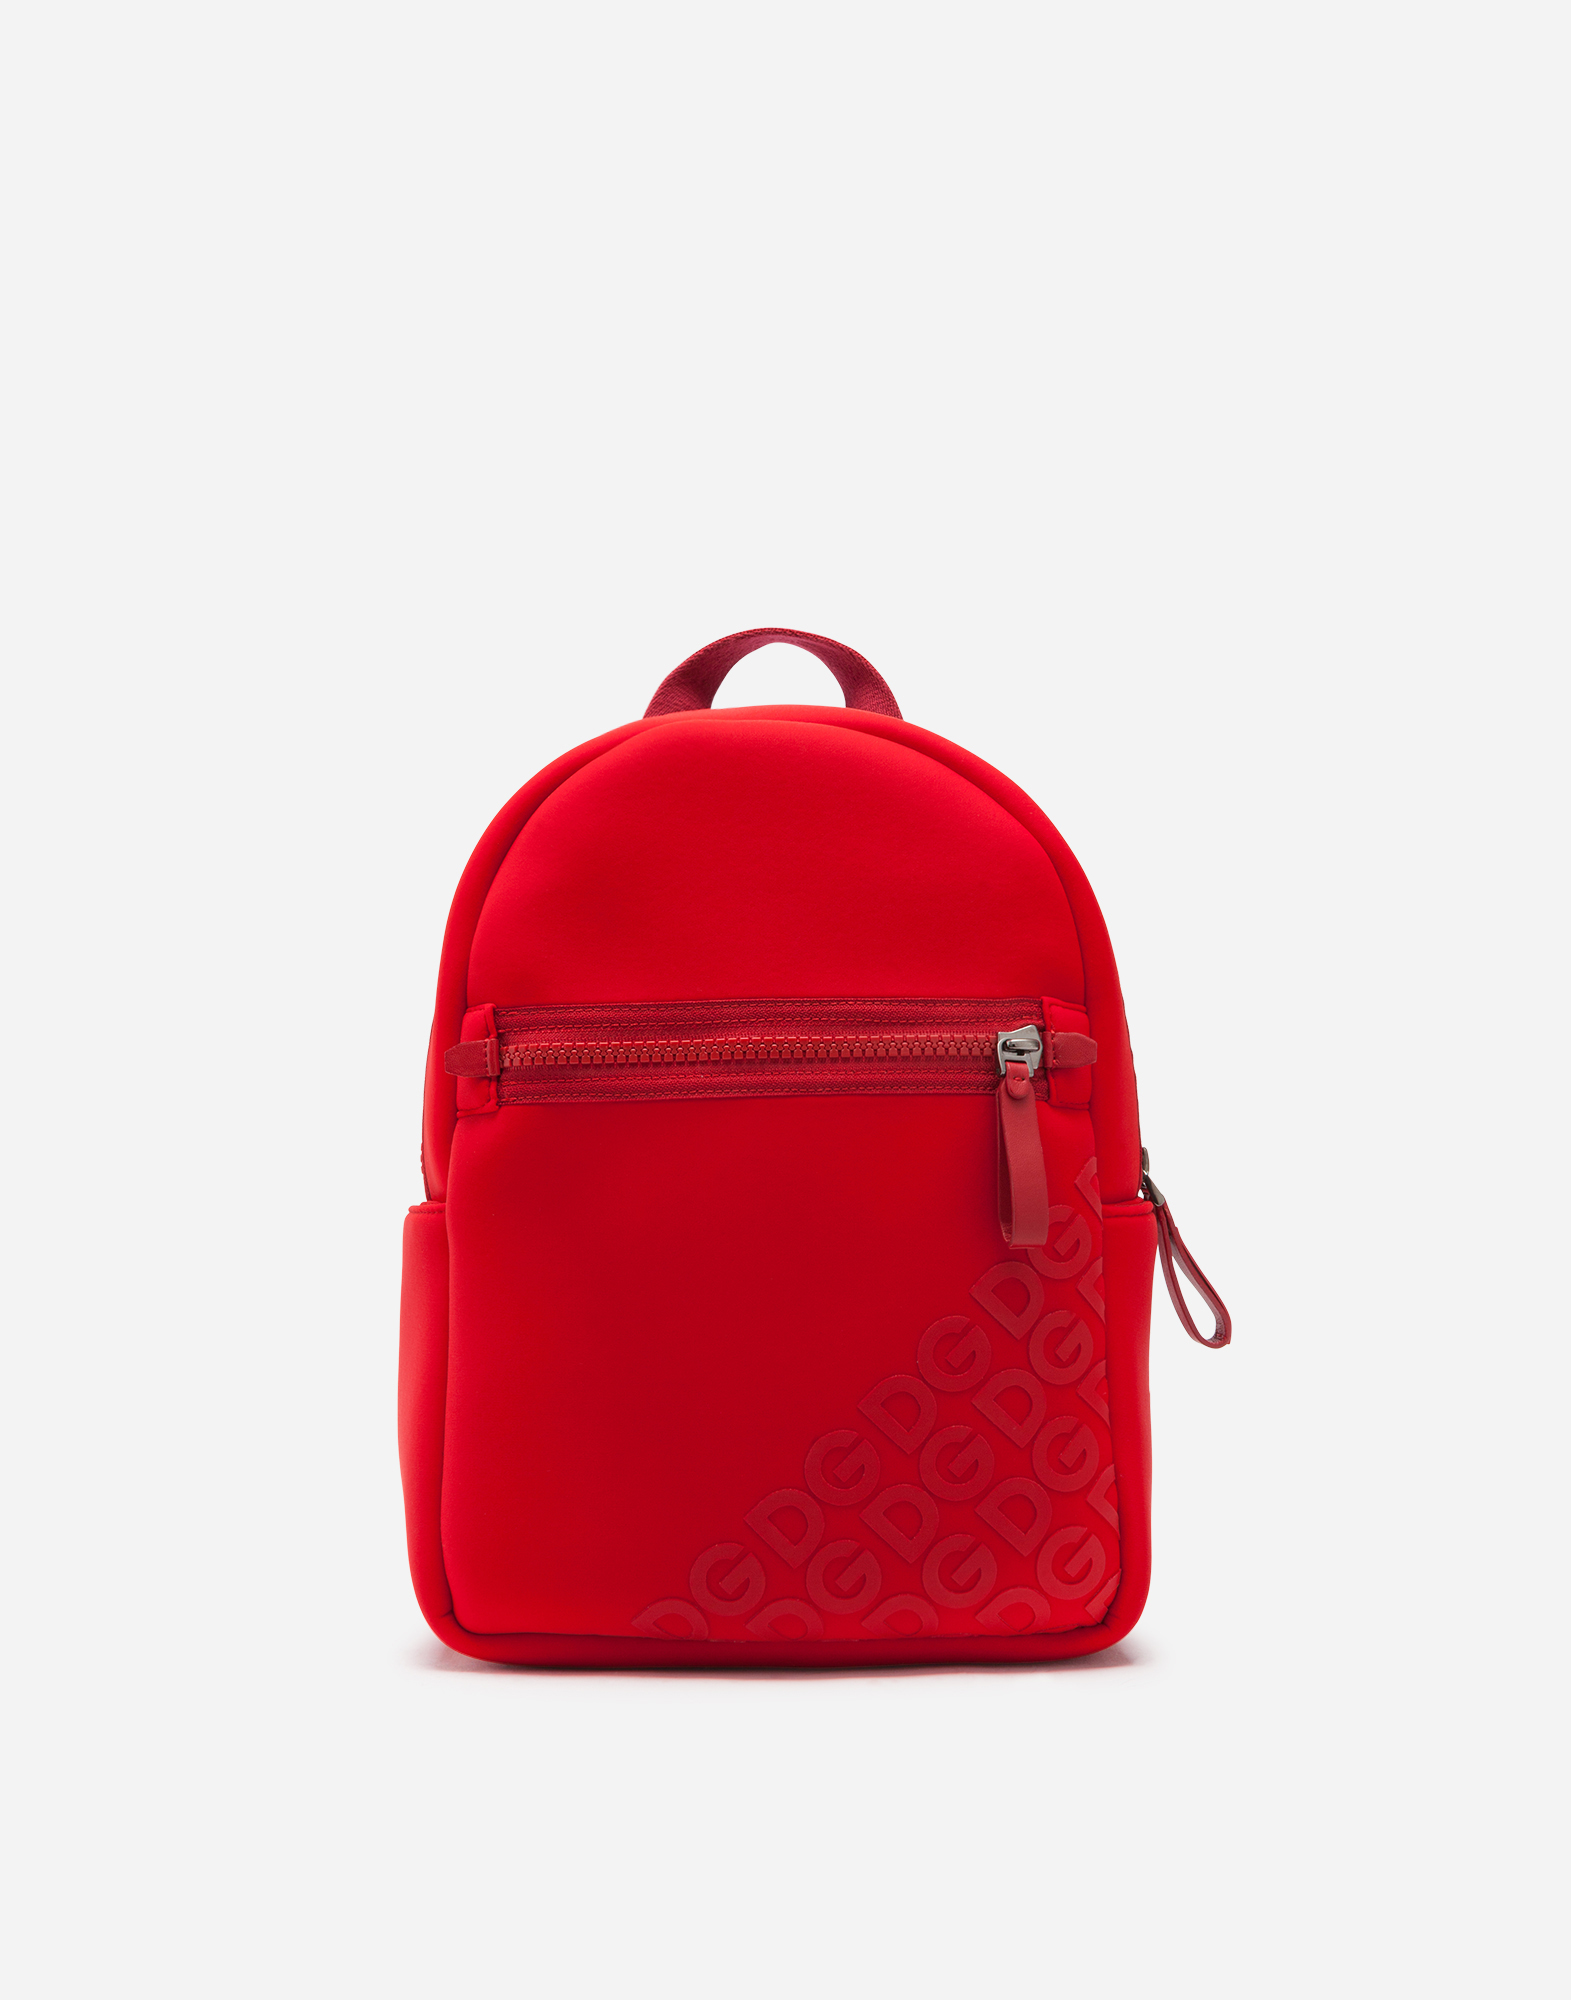 DOLCE & GABBANA Neoprene backpack with rubberized logo